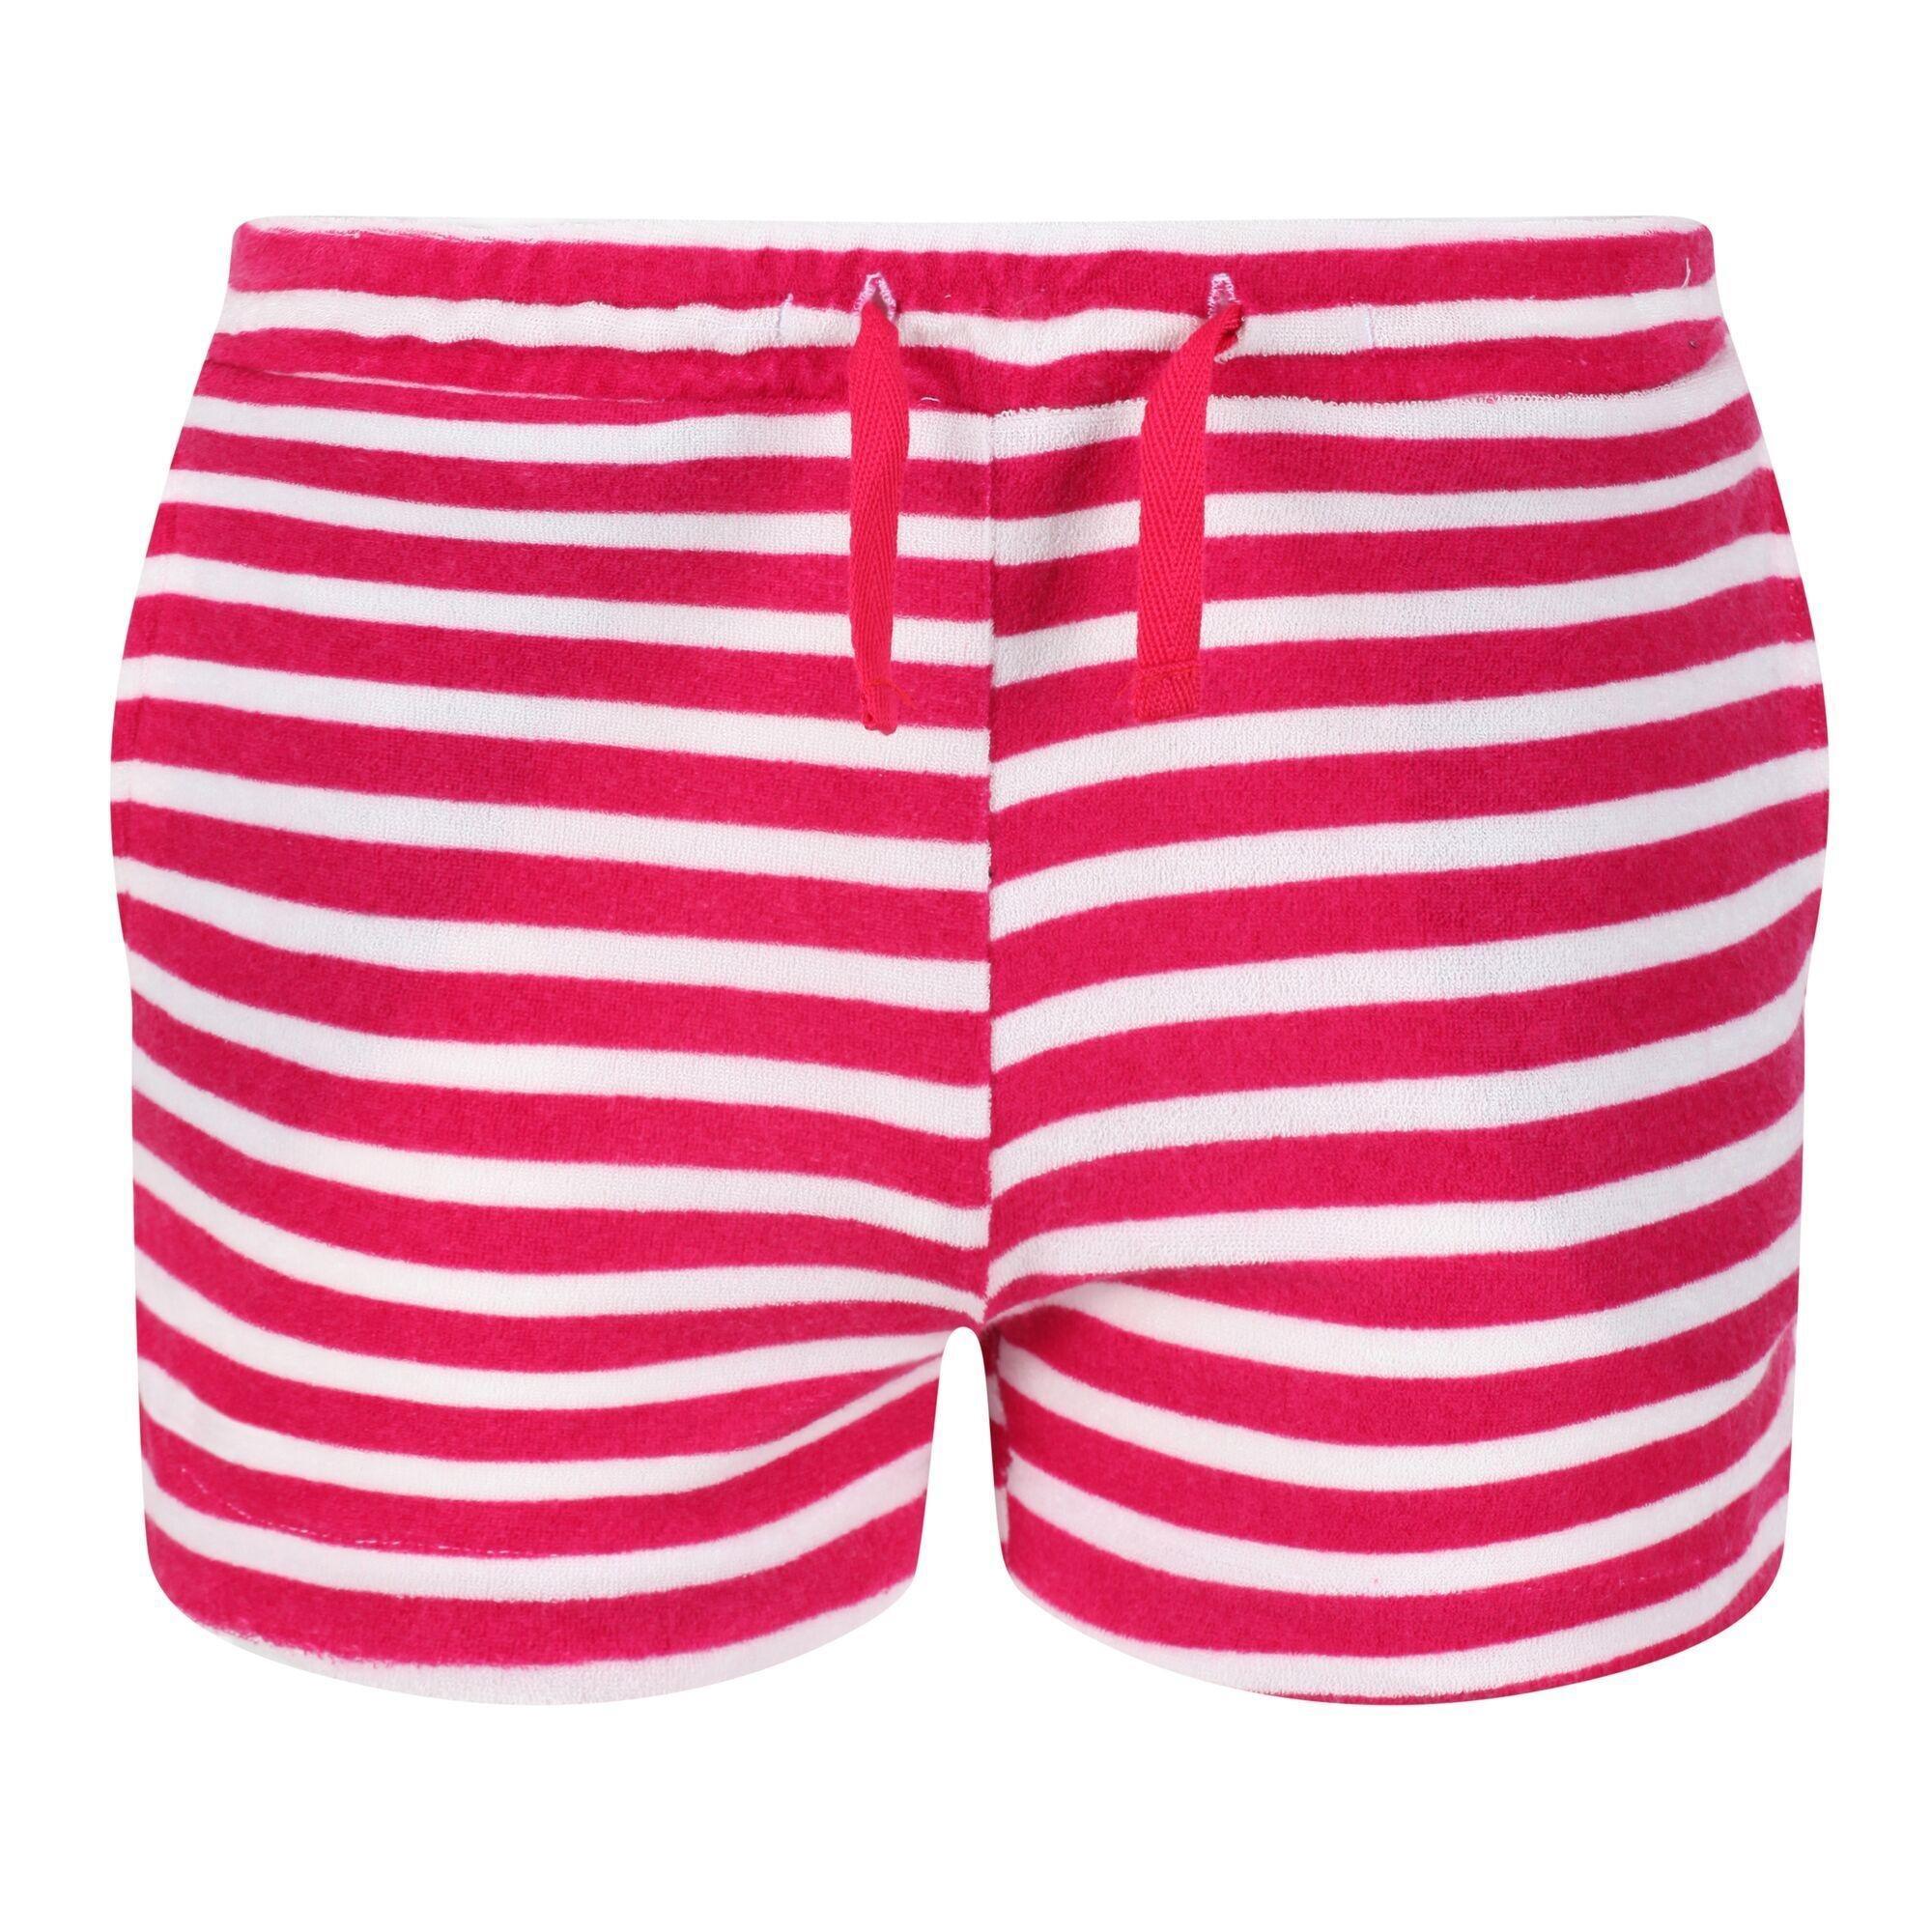 Regatta Childrens/Kids Dayana Towelling Stripe Casual Shorts (Pink Fusion/White) (9-10 Years)